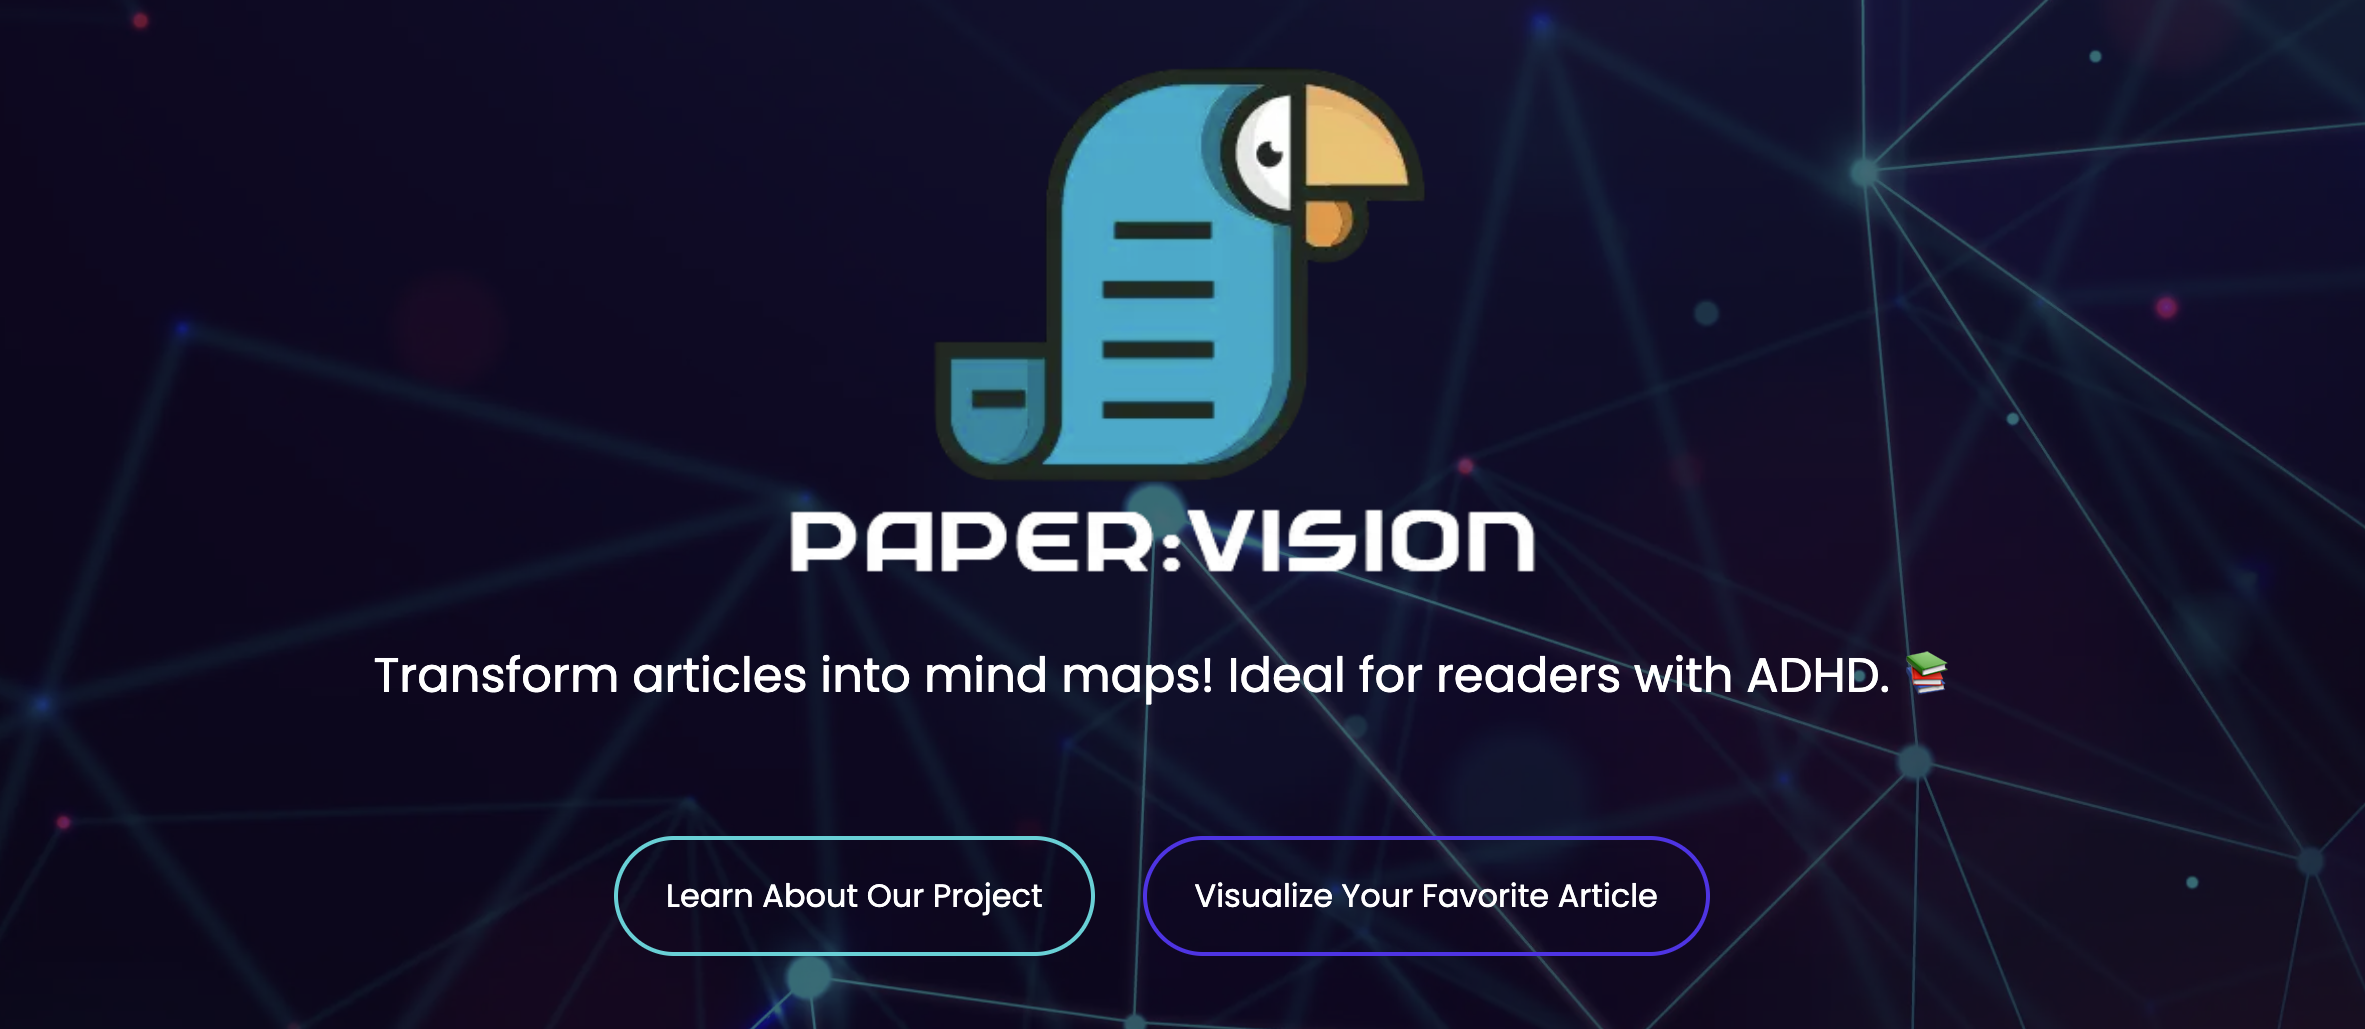 Paper:Vision